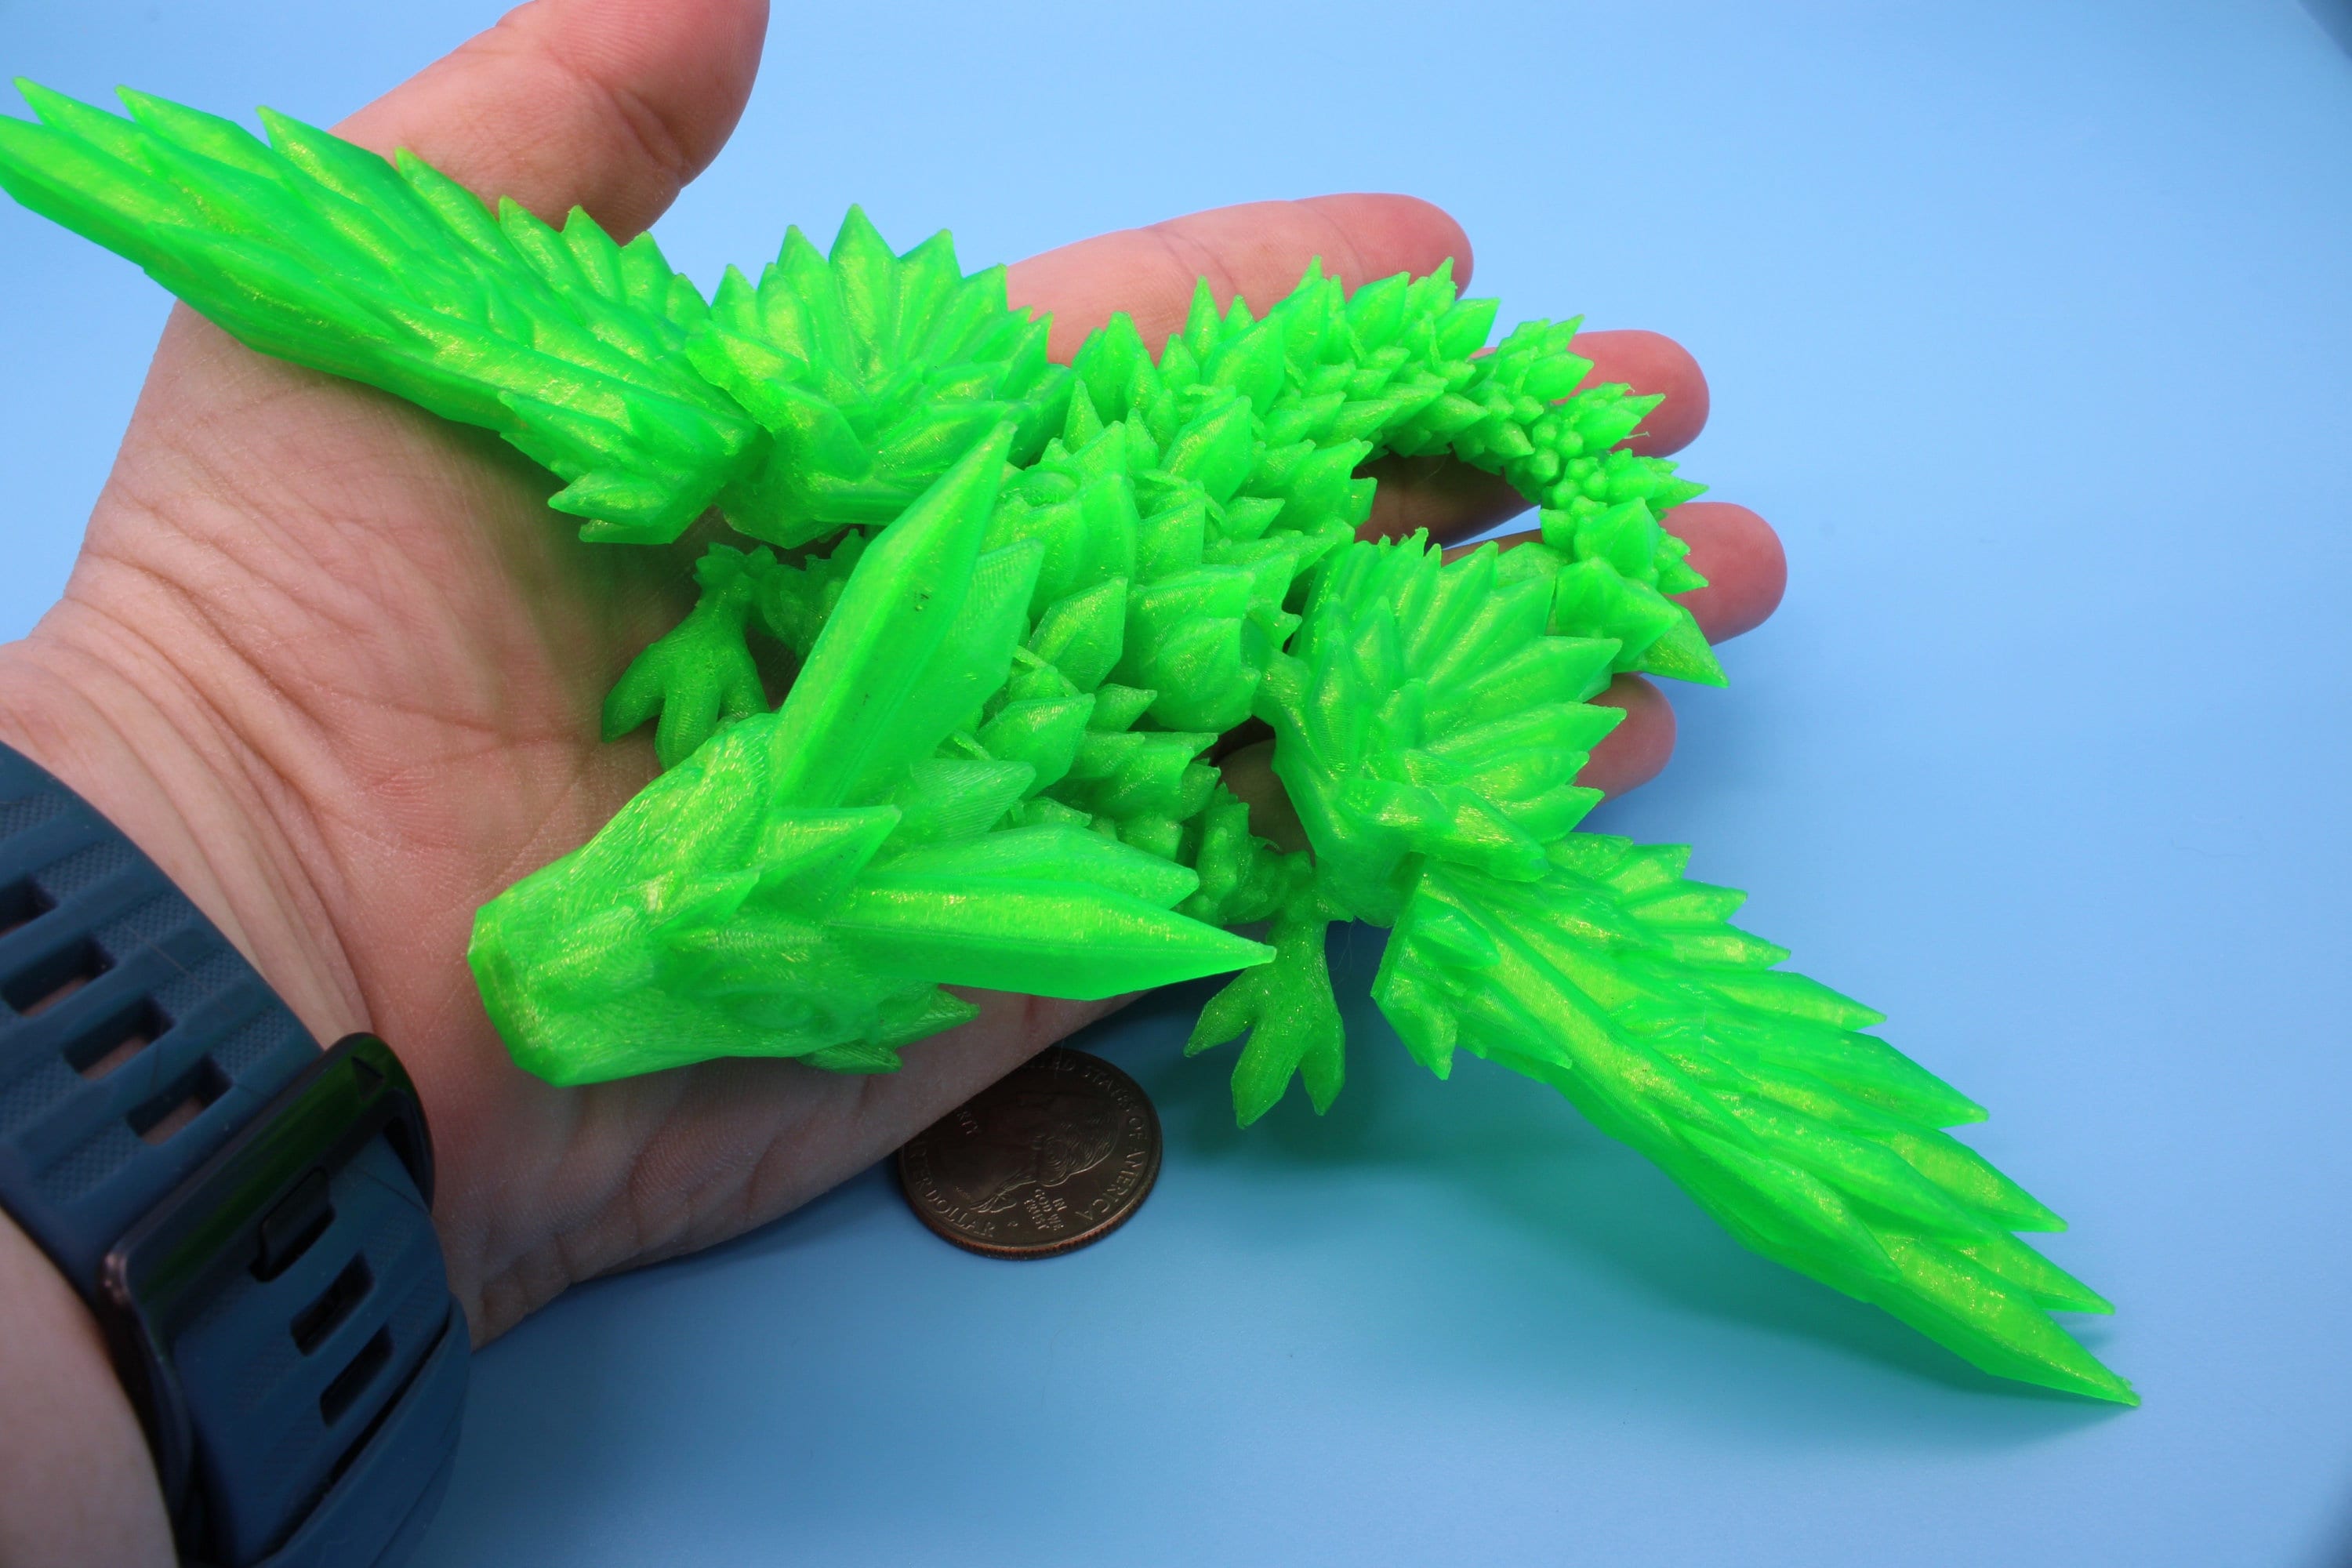 Baby Crystal Wing Dragon- Green | Miniature | 3D printed | Dragon Fidget | Flexi Toy | 7 in. | Pet Dragon.